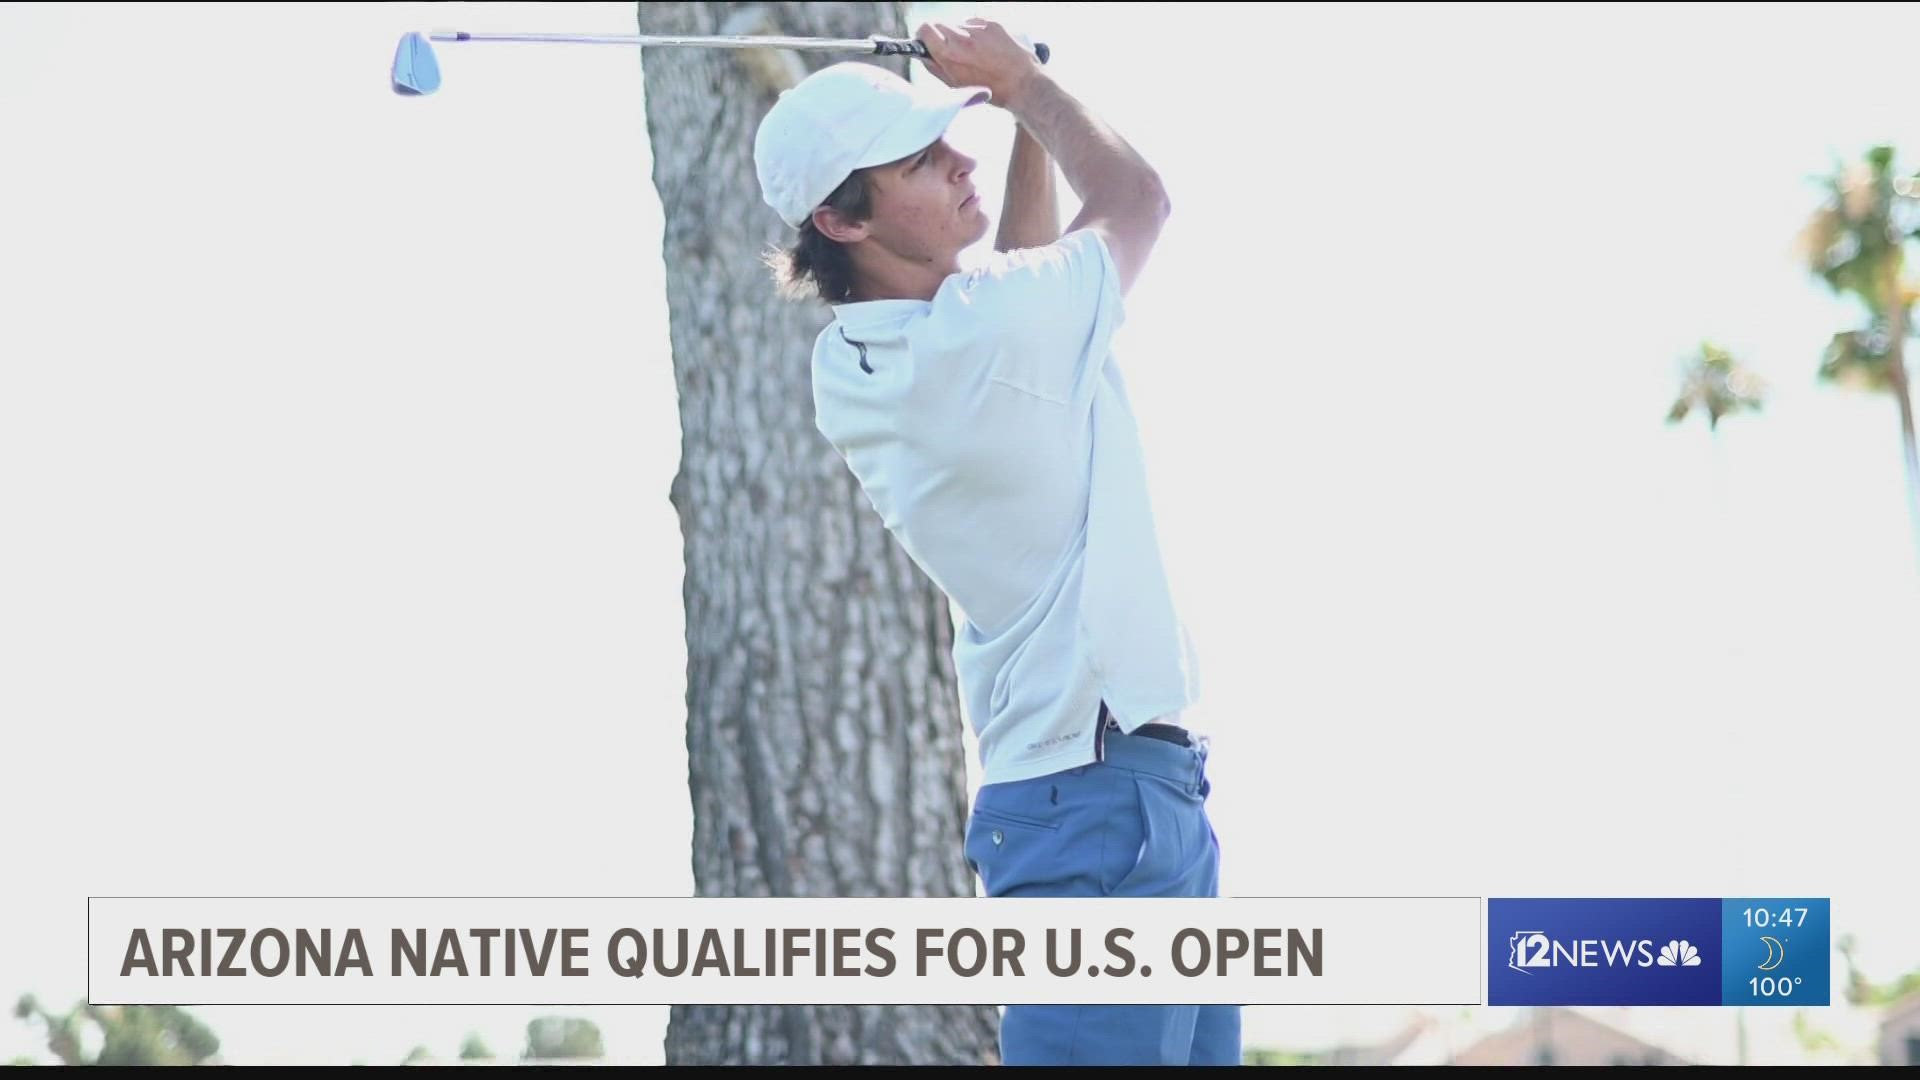 Surprise Mountain Alumni Ben Lorenz will make his PGA Tour debut in the US Open.